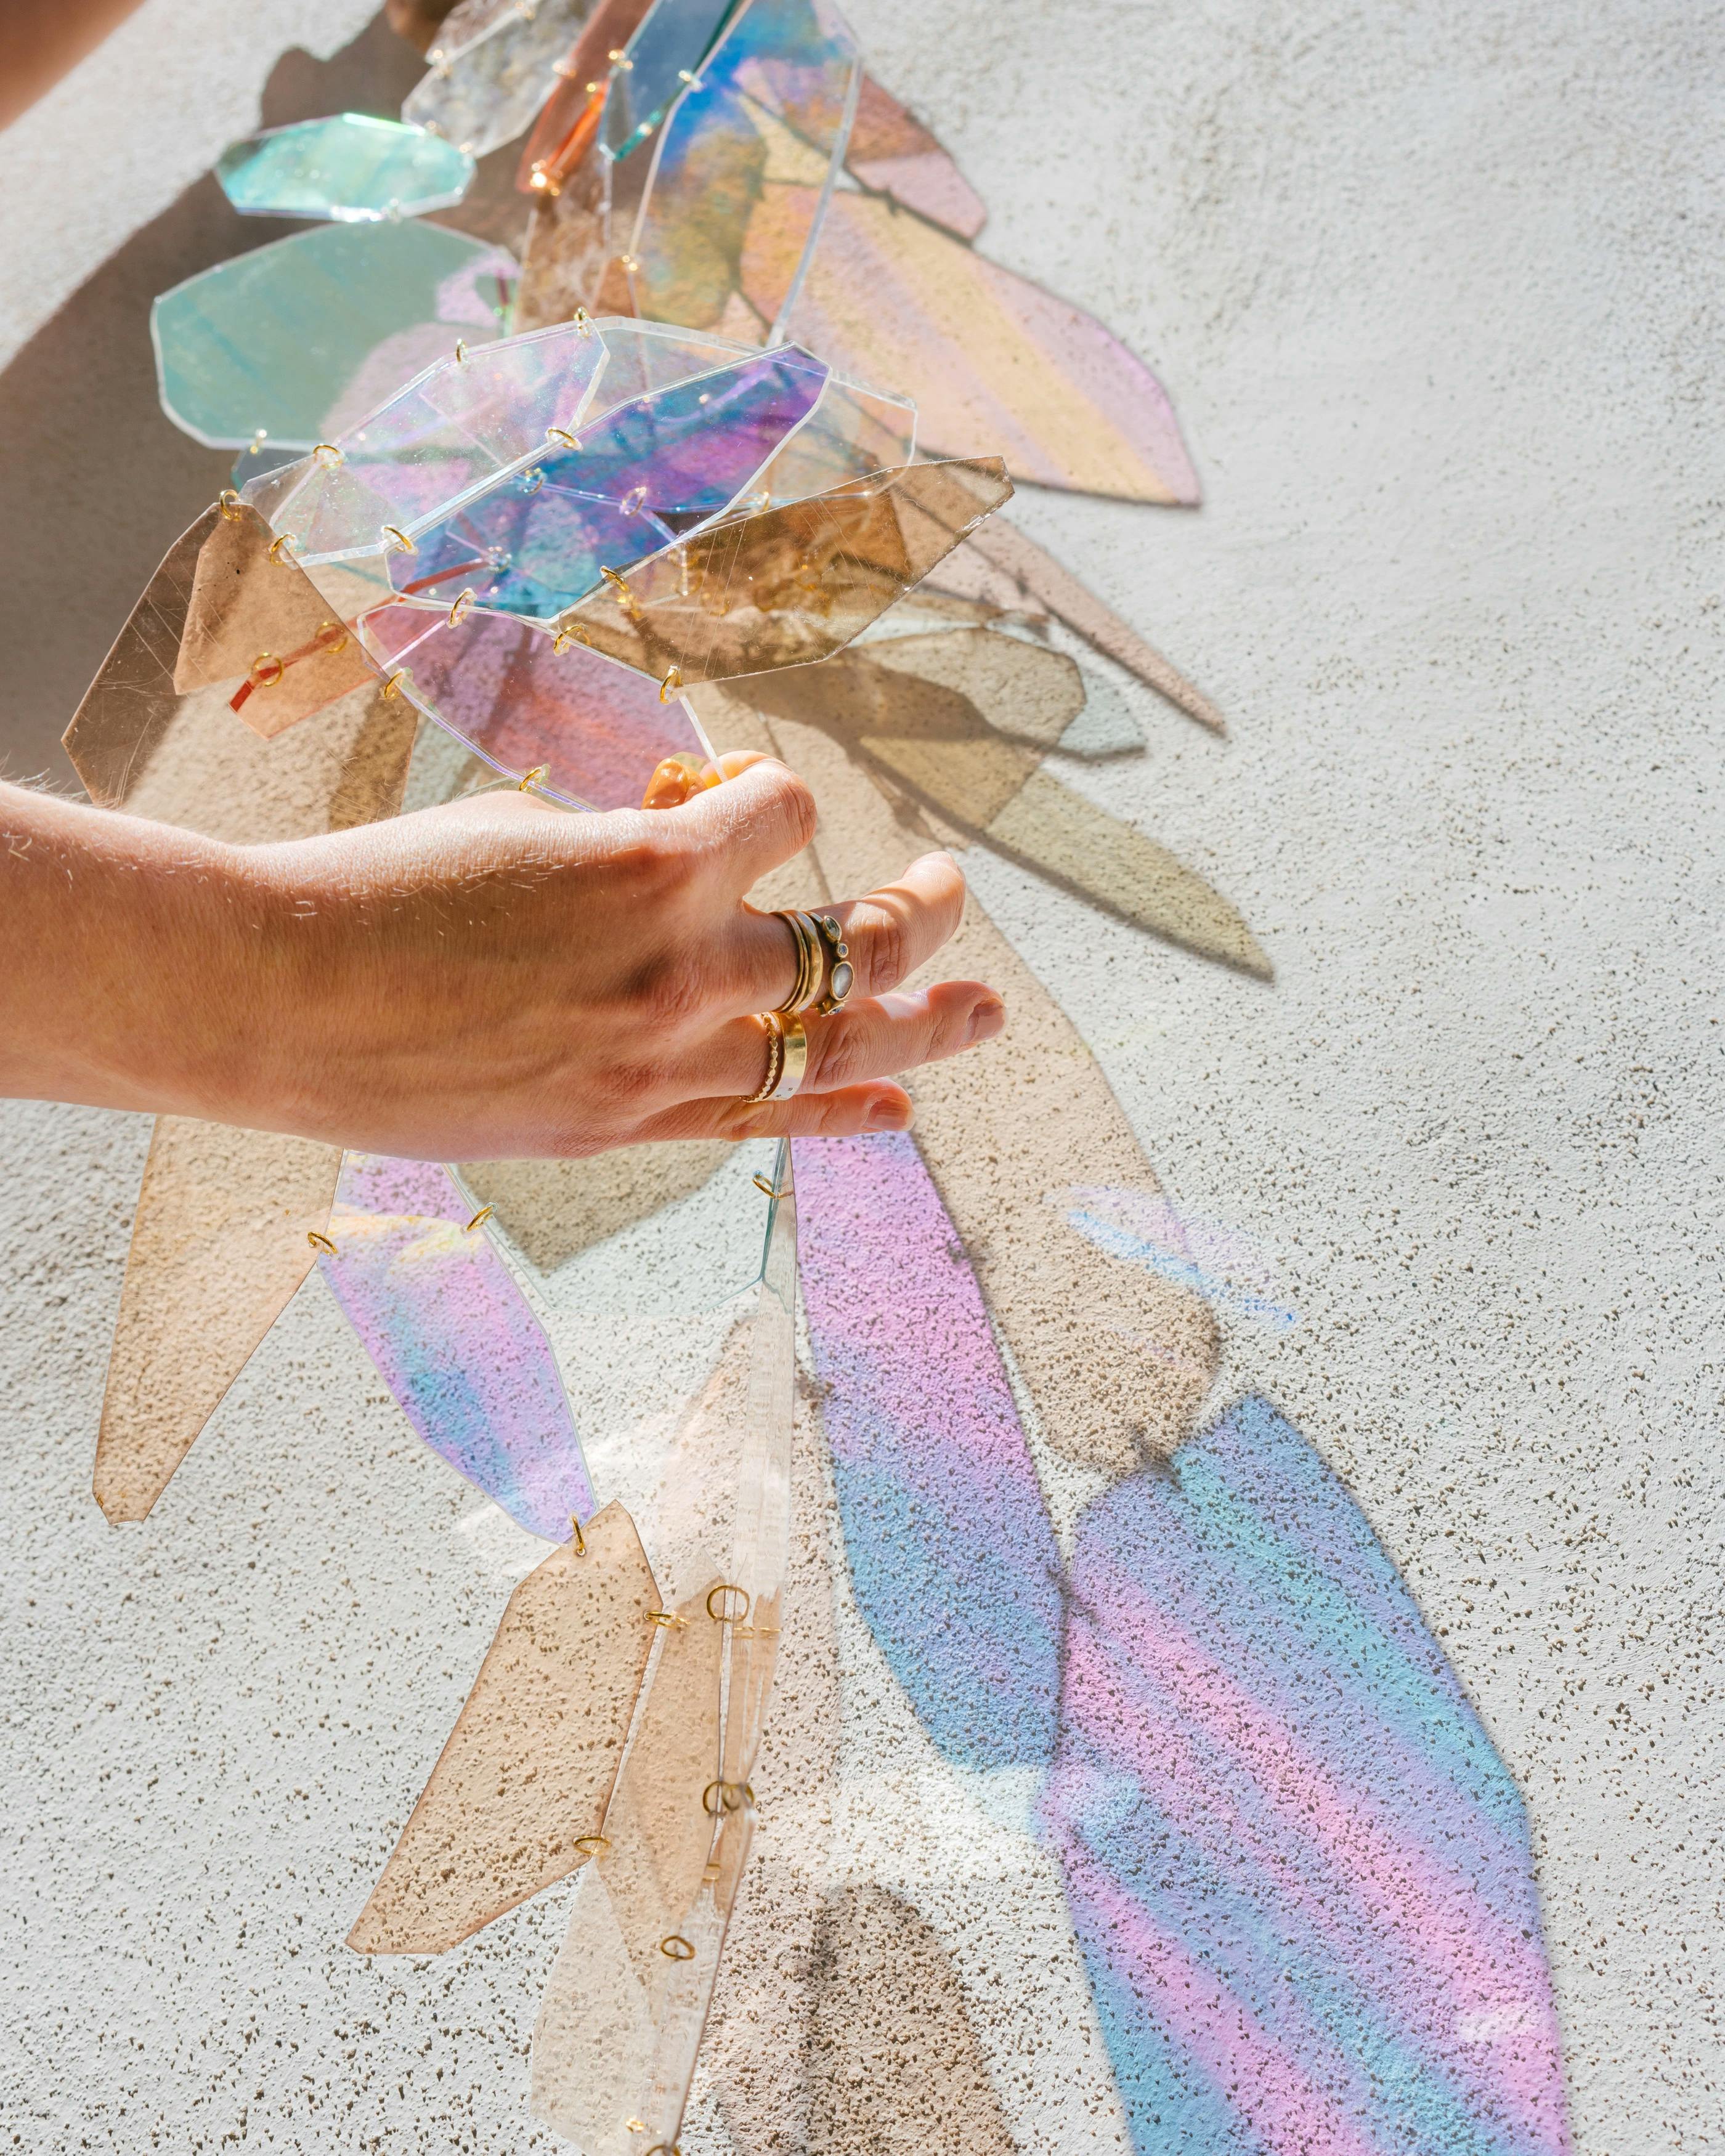 Hand of artist Christina Watka adjusting iridescent sculpture at MacArthur Place.